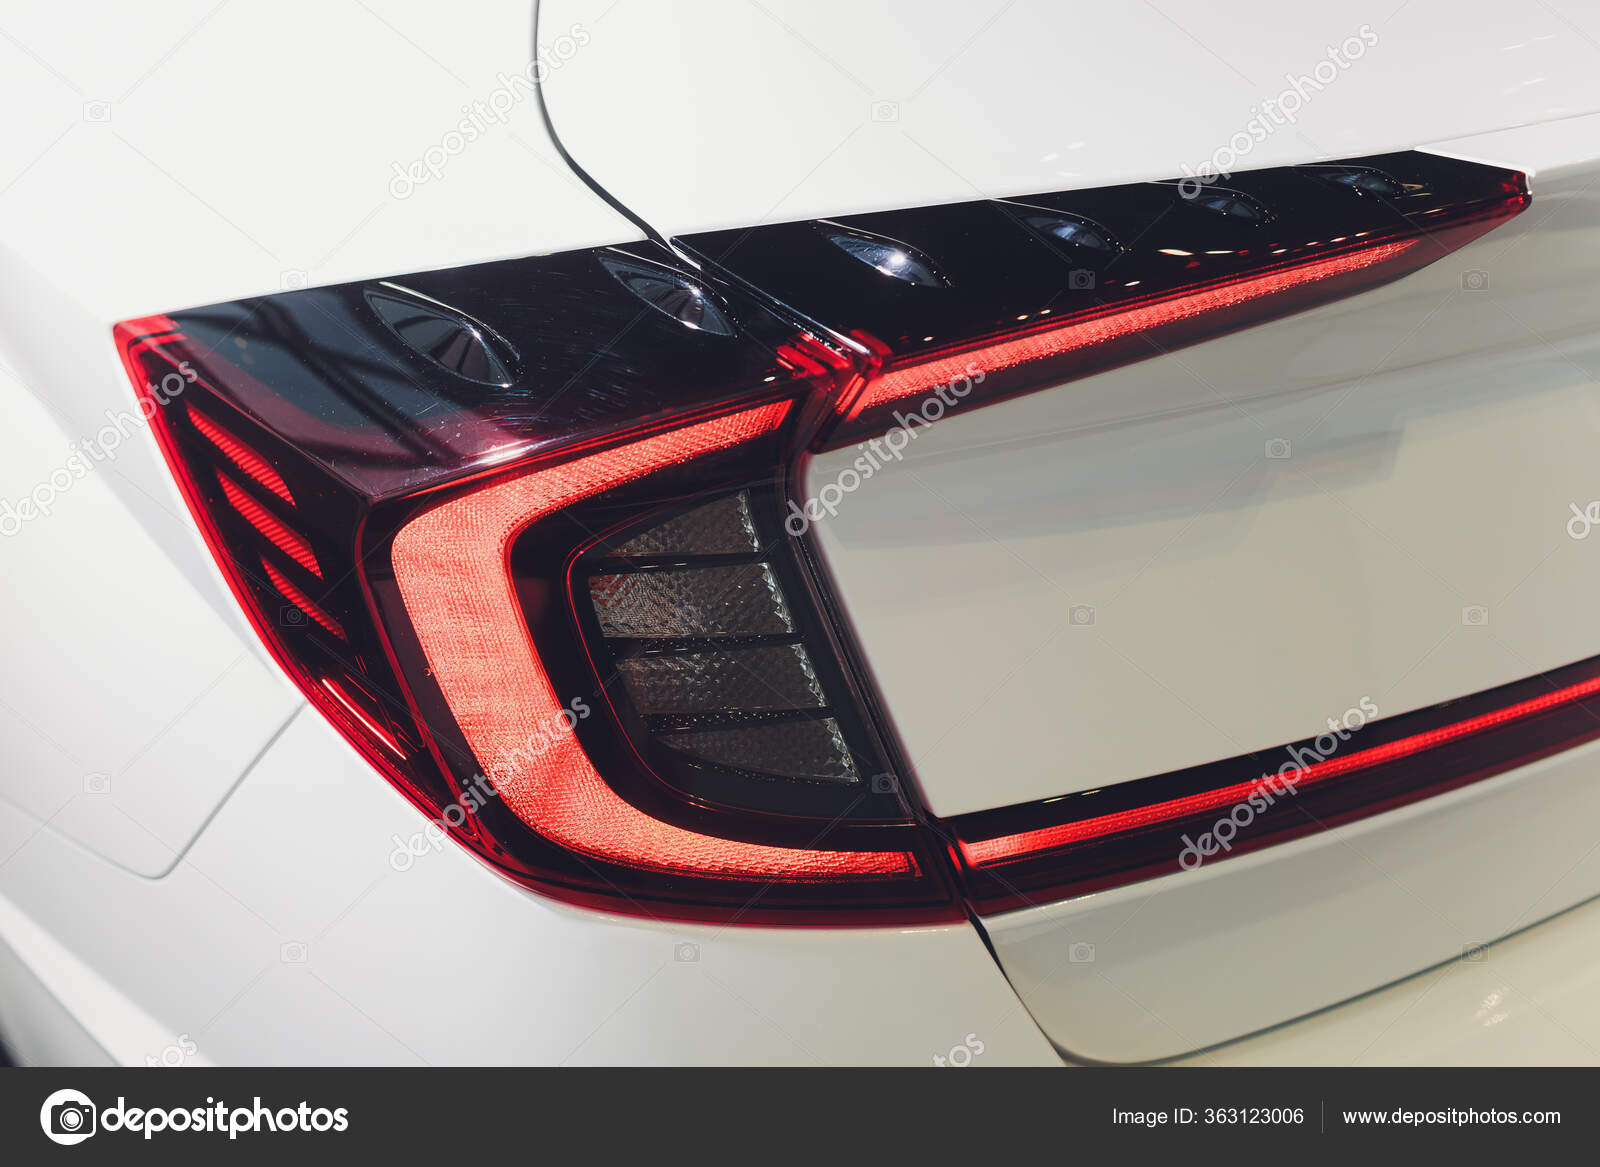 https://st3.depositphotos.com/13798620/36312/i/1600/depositphotos_363123006-stock-photo-car-detail-new-led-taillight.jpg